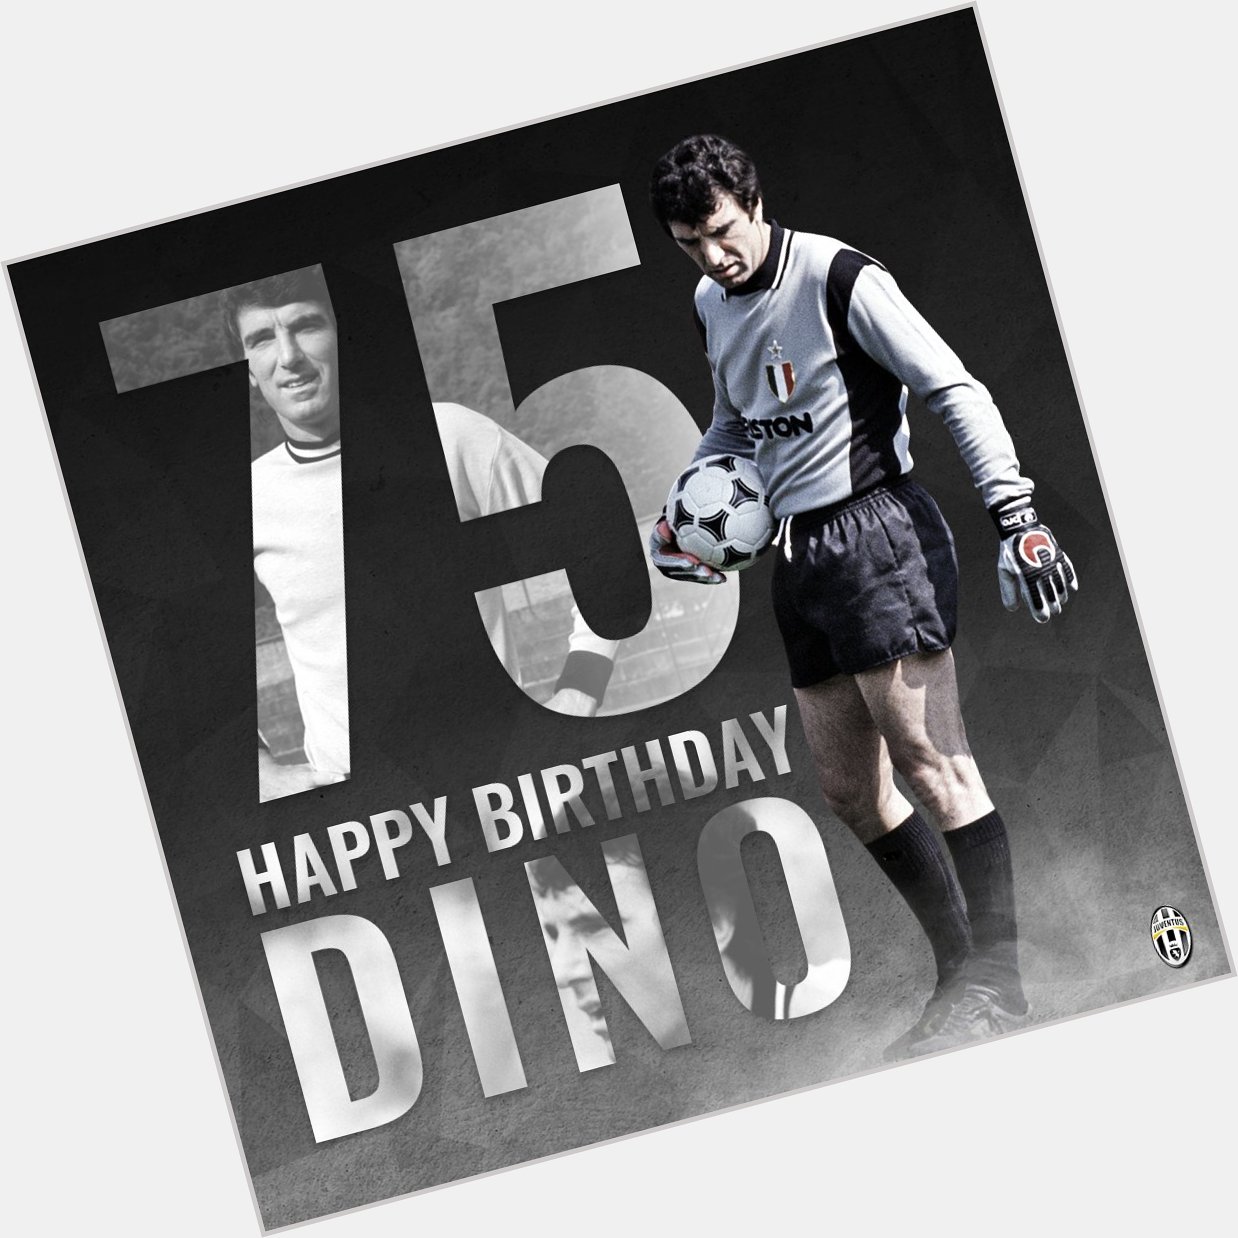 The embodiment of Happy 75th birthday to Dino        